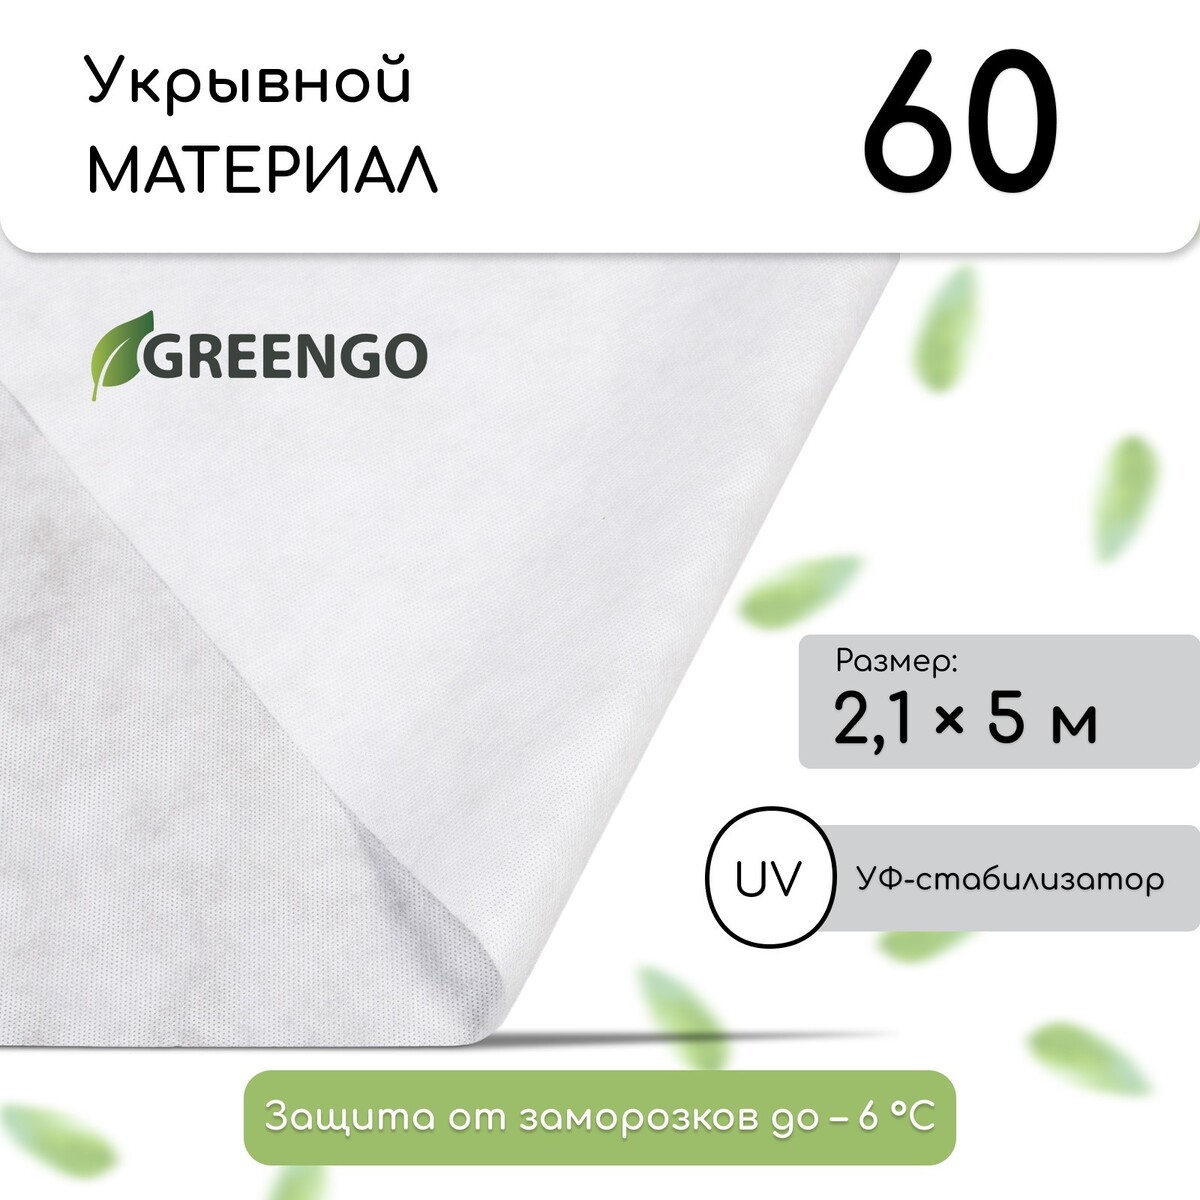  , 5   2, 1 ,  60 / ,  -, , greengo,  20%